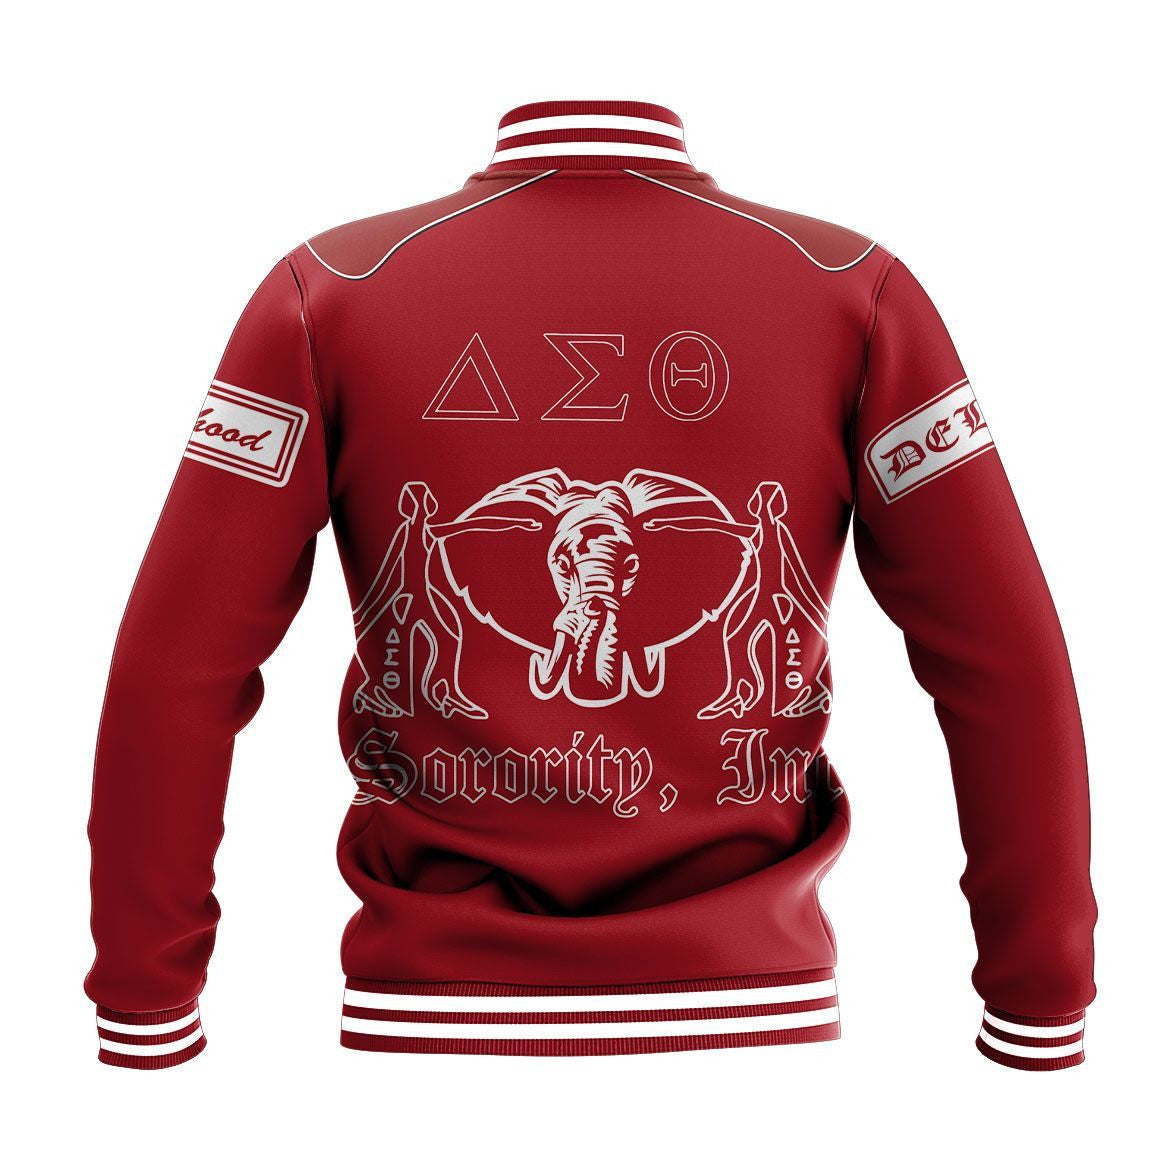 Sorority Jacket - Elephant Delta Sigma Theta Sorority Baseball Jacket